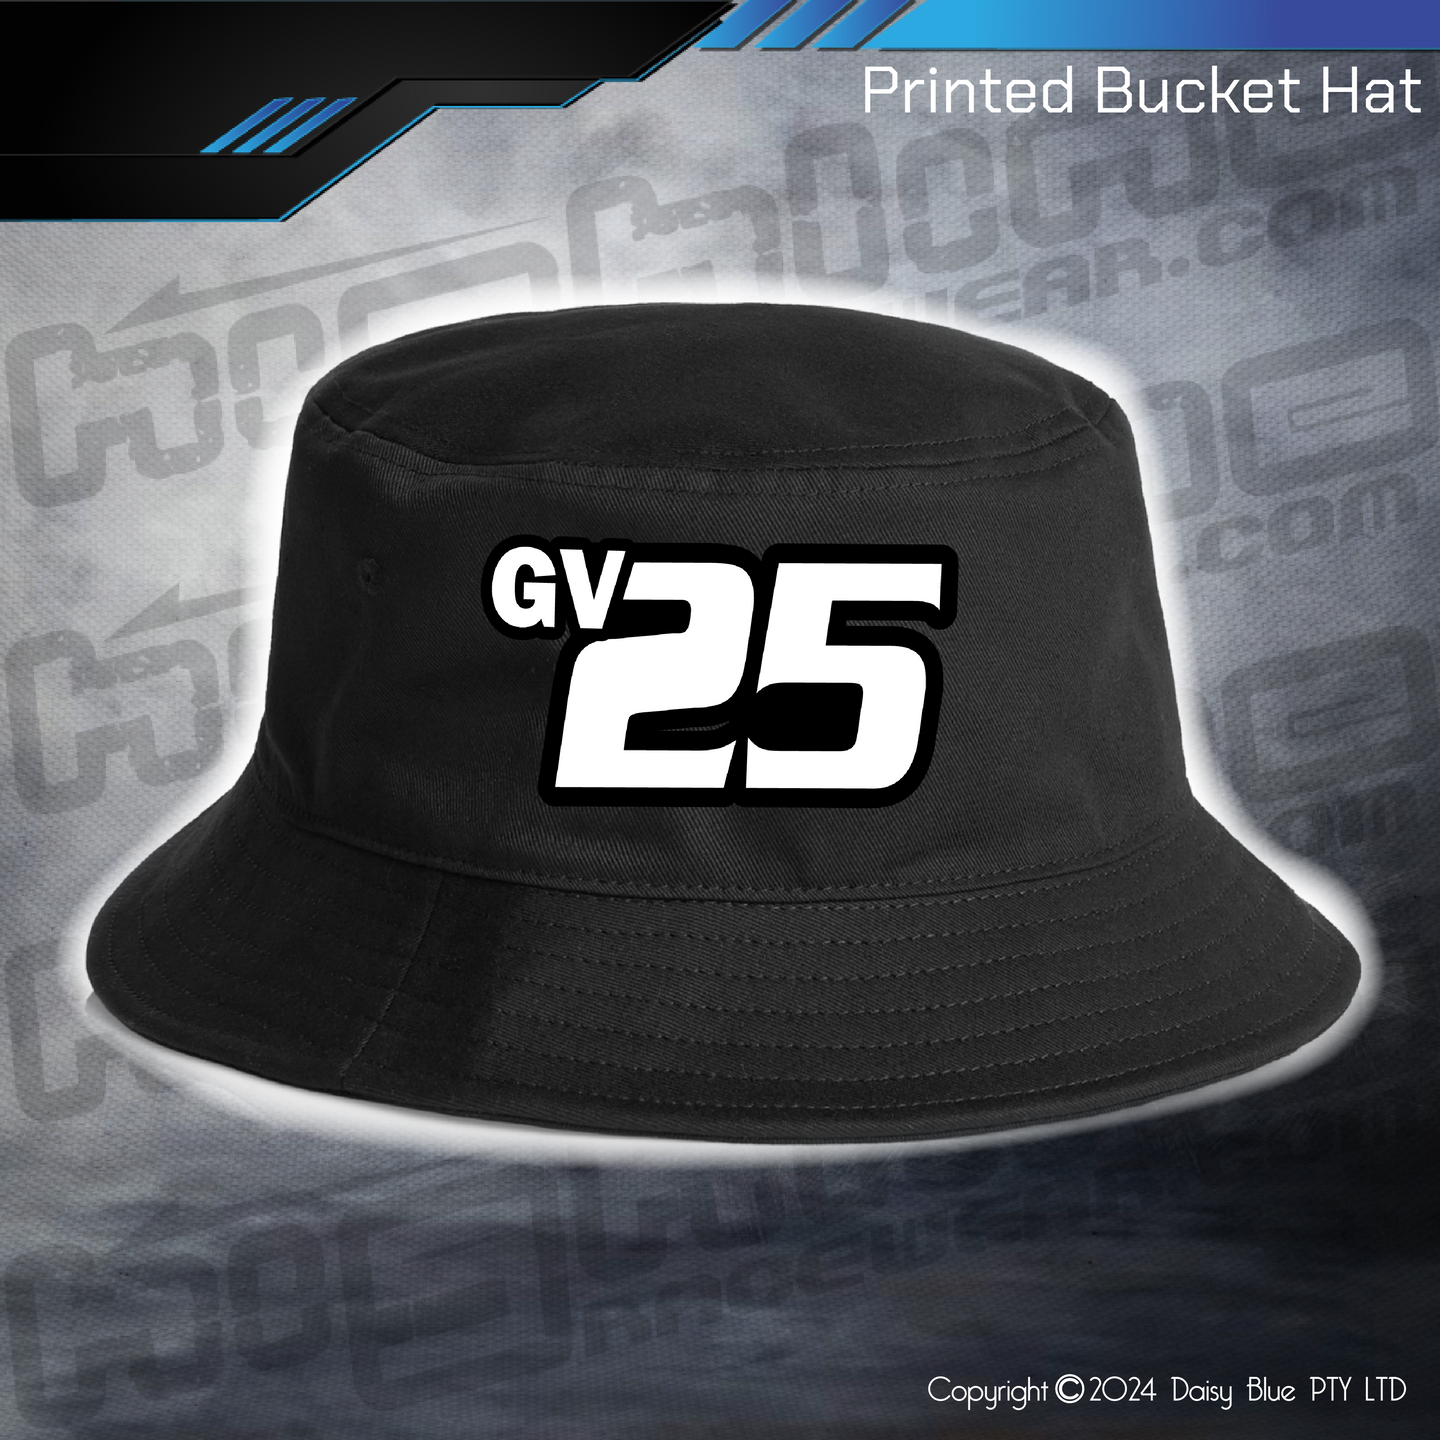 Printed Bucket Hat - Taylor/Humphrey